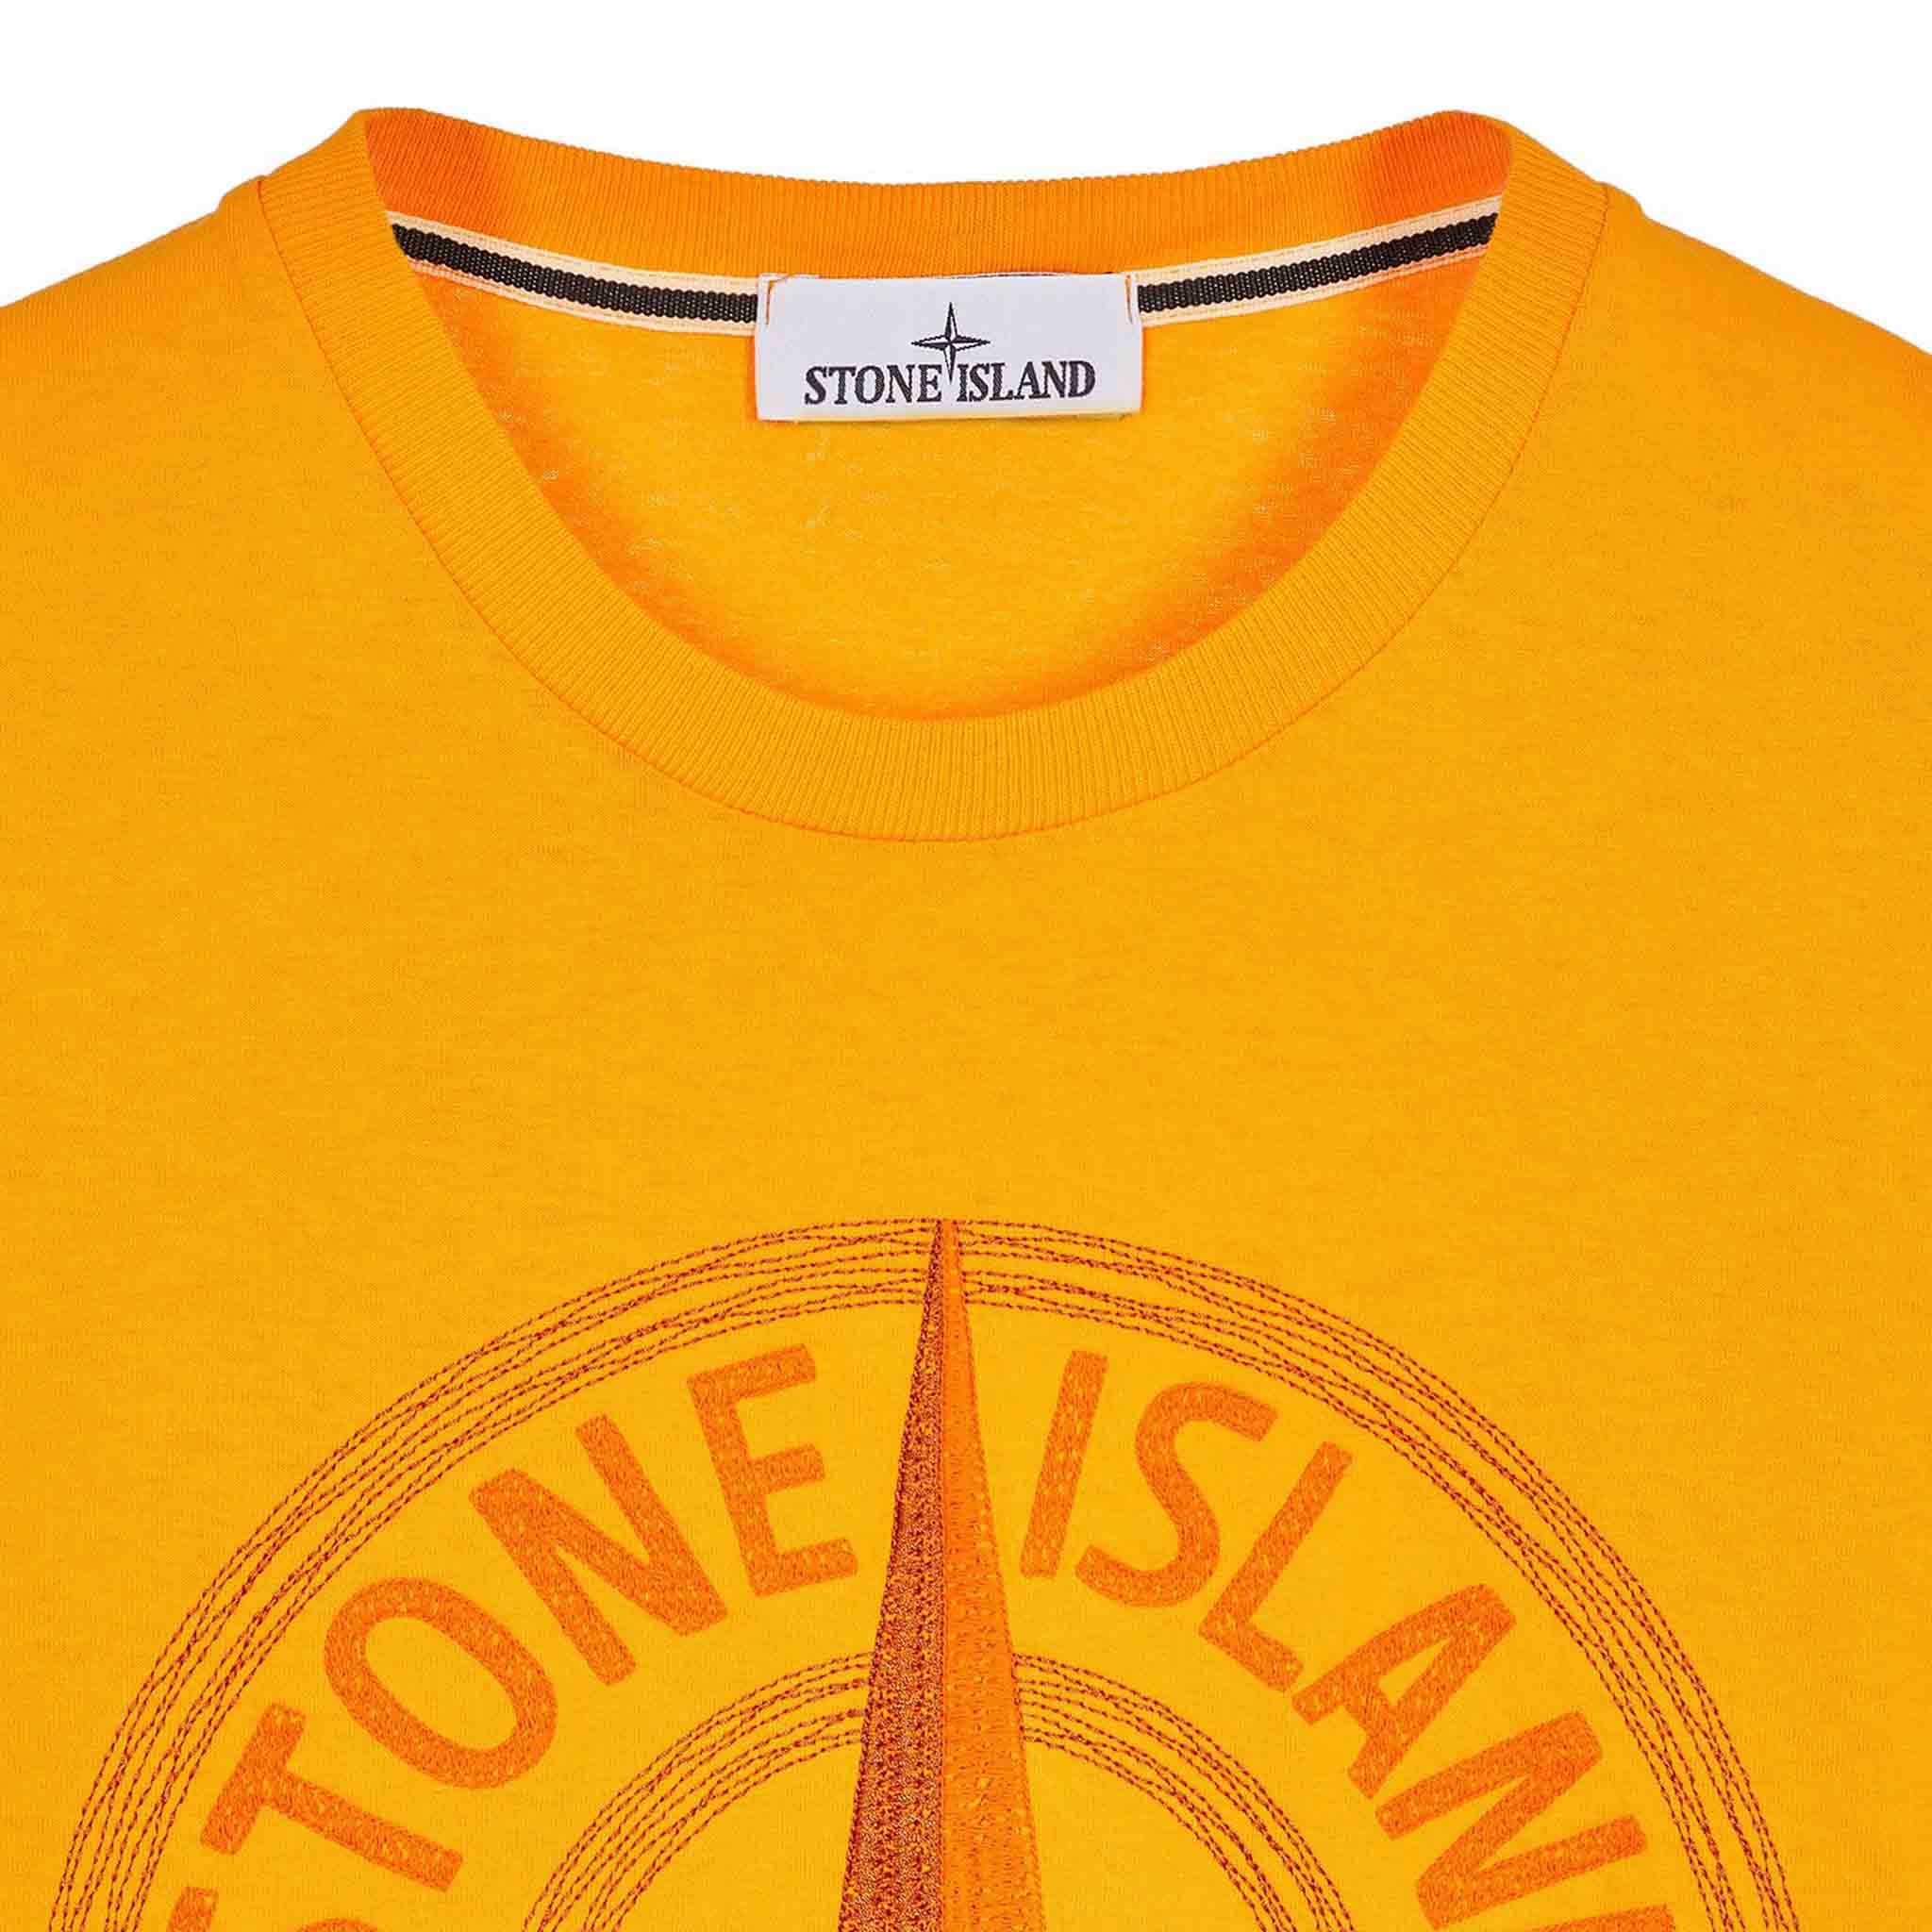 Stone Island "Stitches Three" Embroidery T-Shirt in Orange